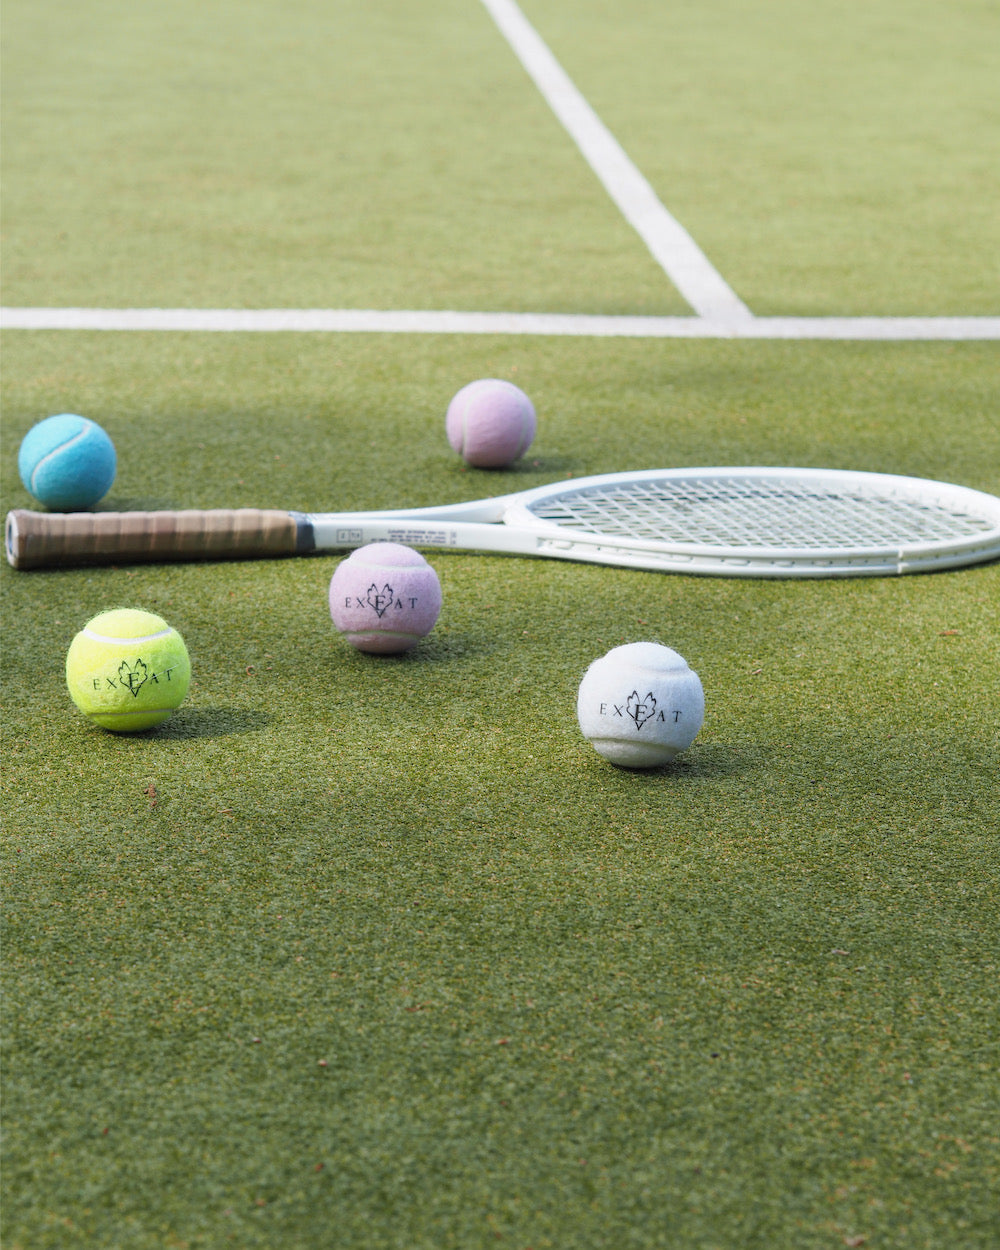 exeat-english-tennis-balls-pink-white-blue-yellow-colourful.jpg